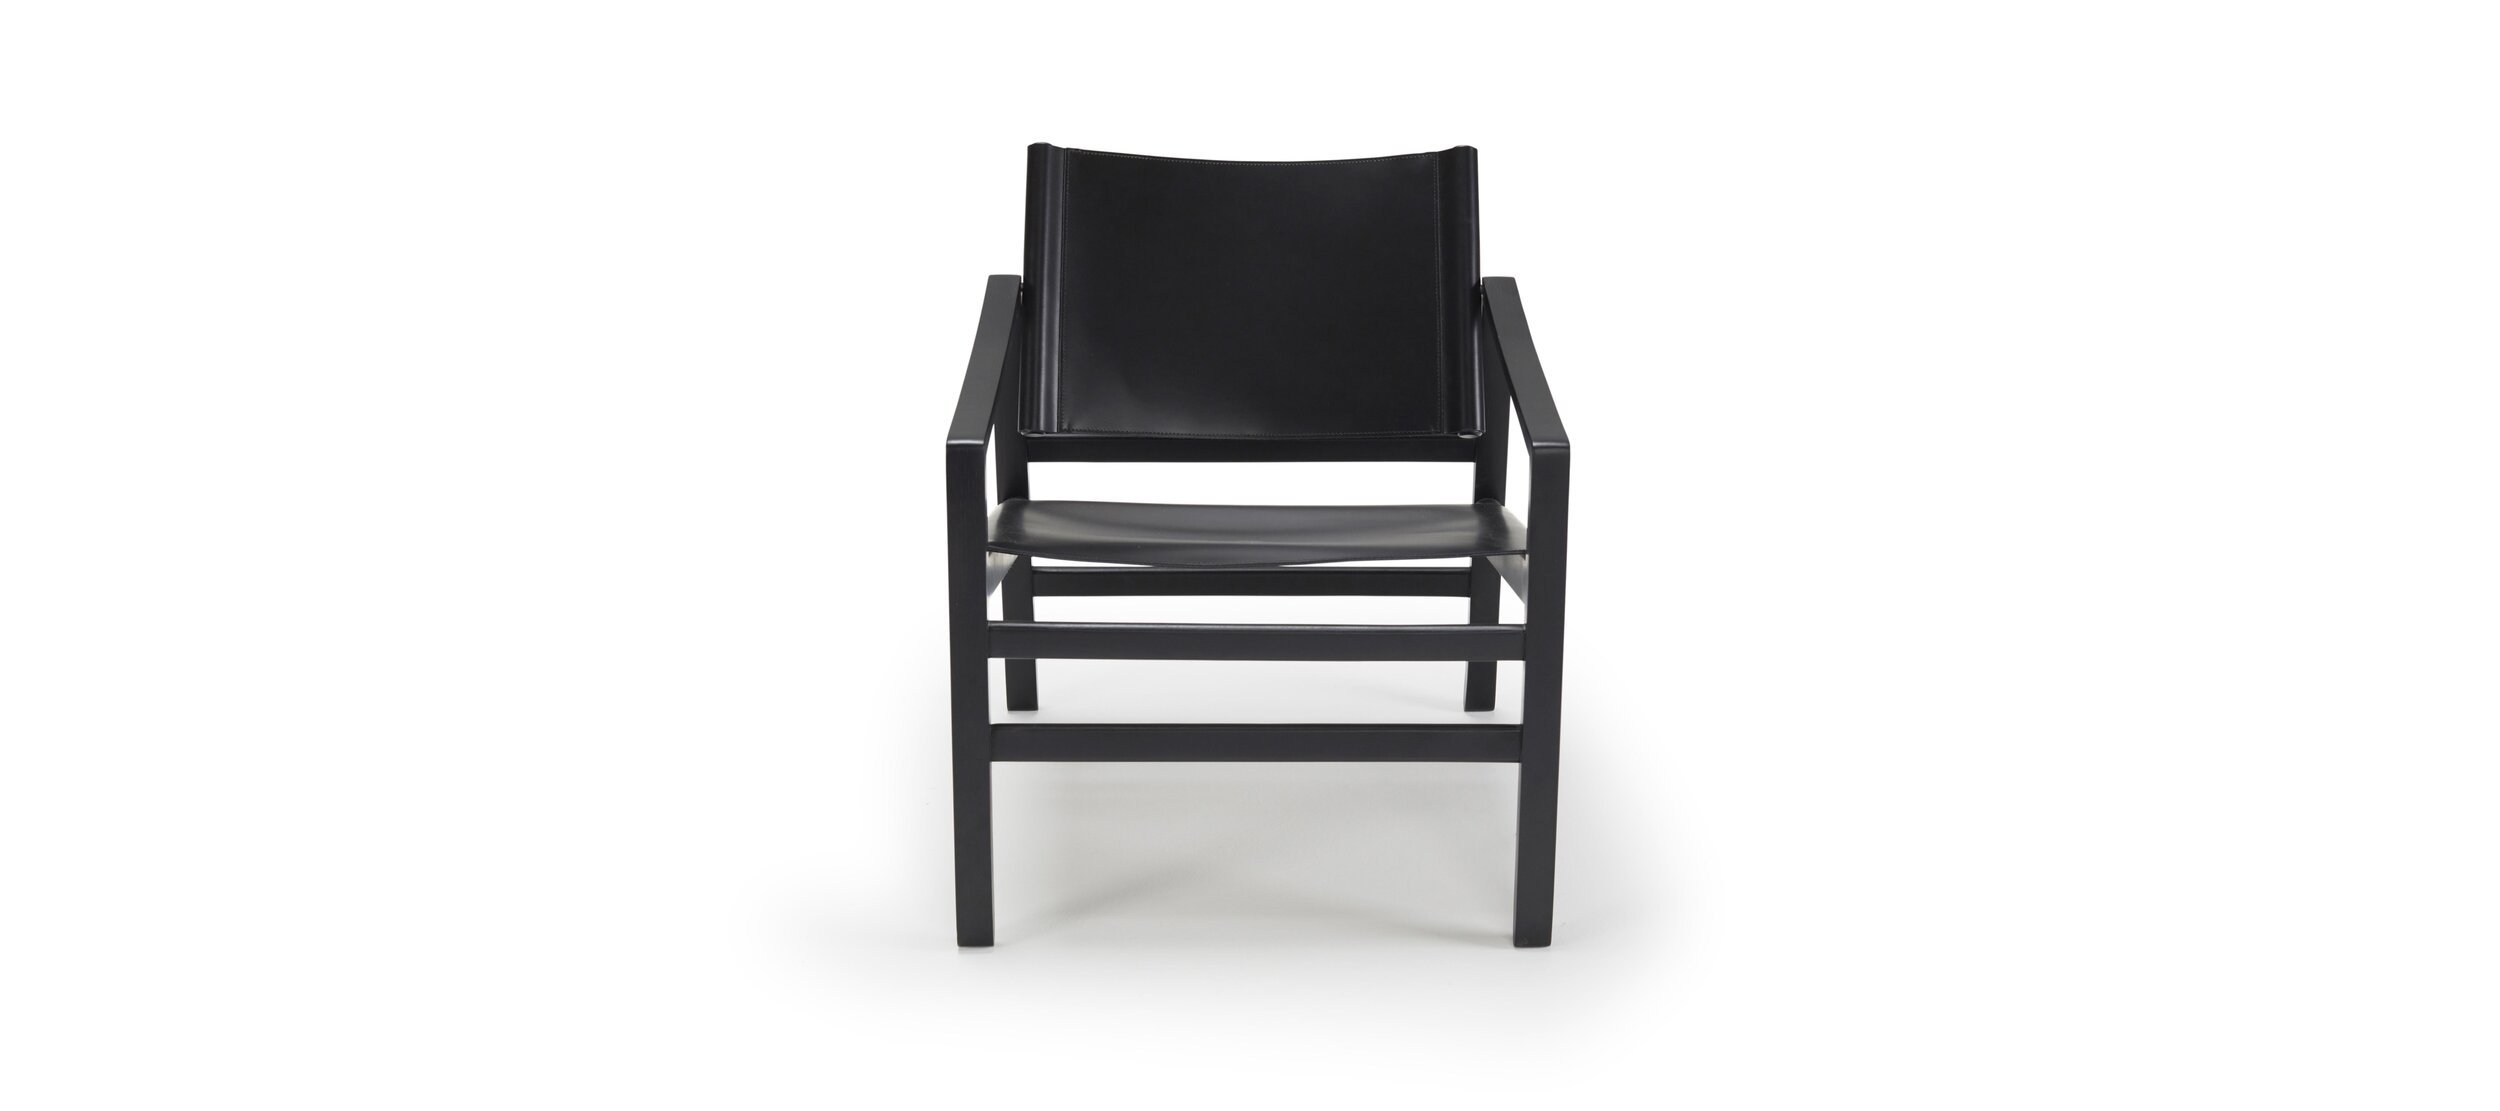 K410-chair-arms-800-black-p5.jpg